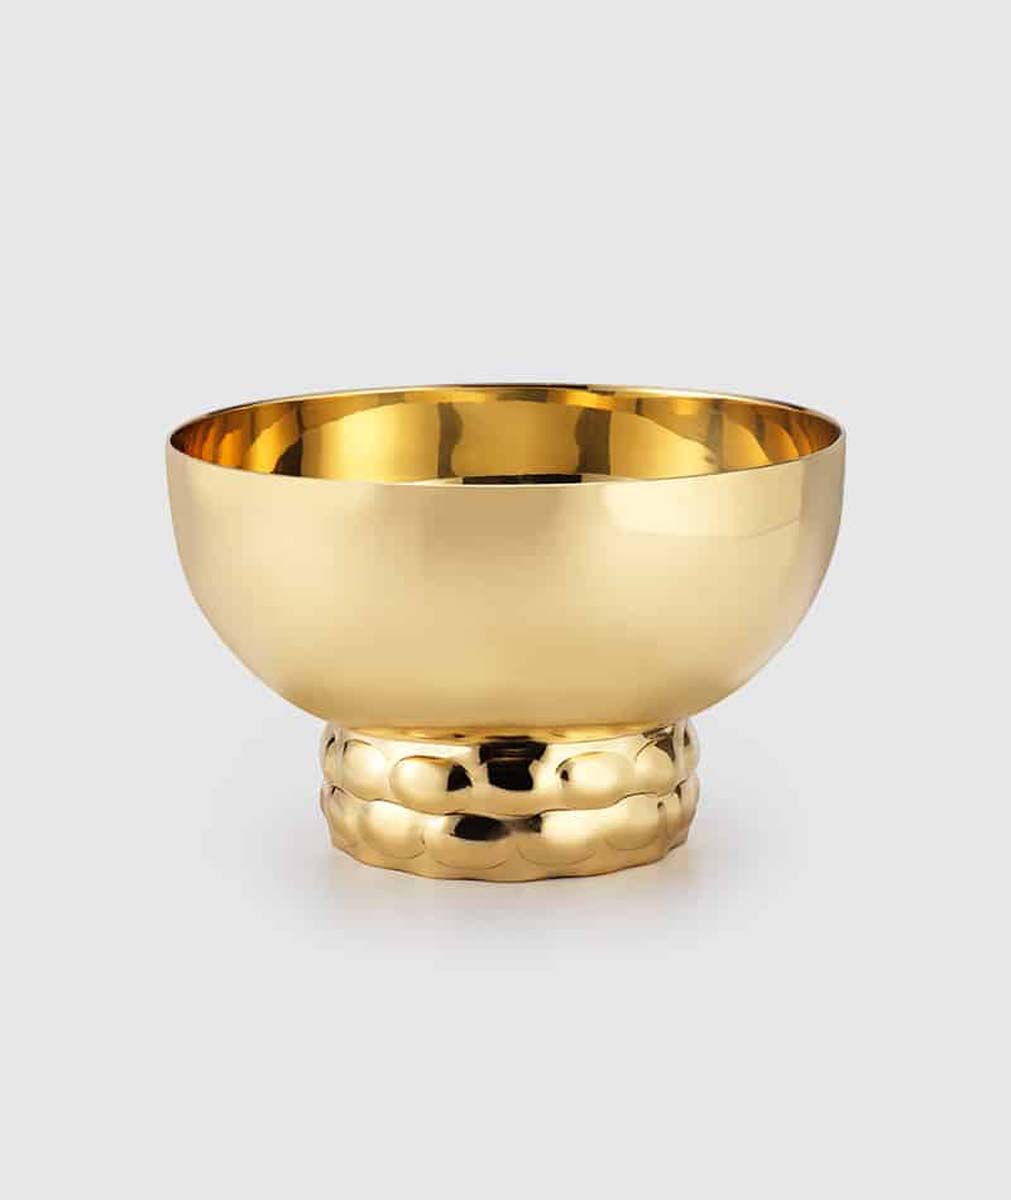 Helios Gold Tone Bowl w Footrim 6 x 3.75 by Mary Jurek Design